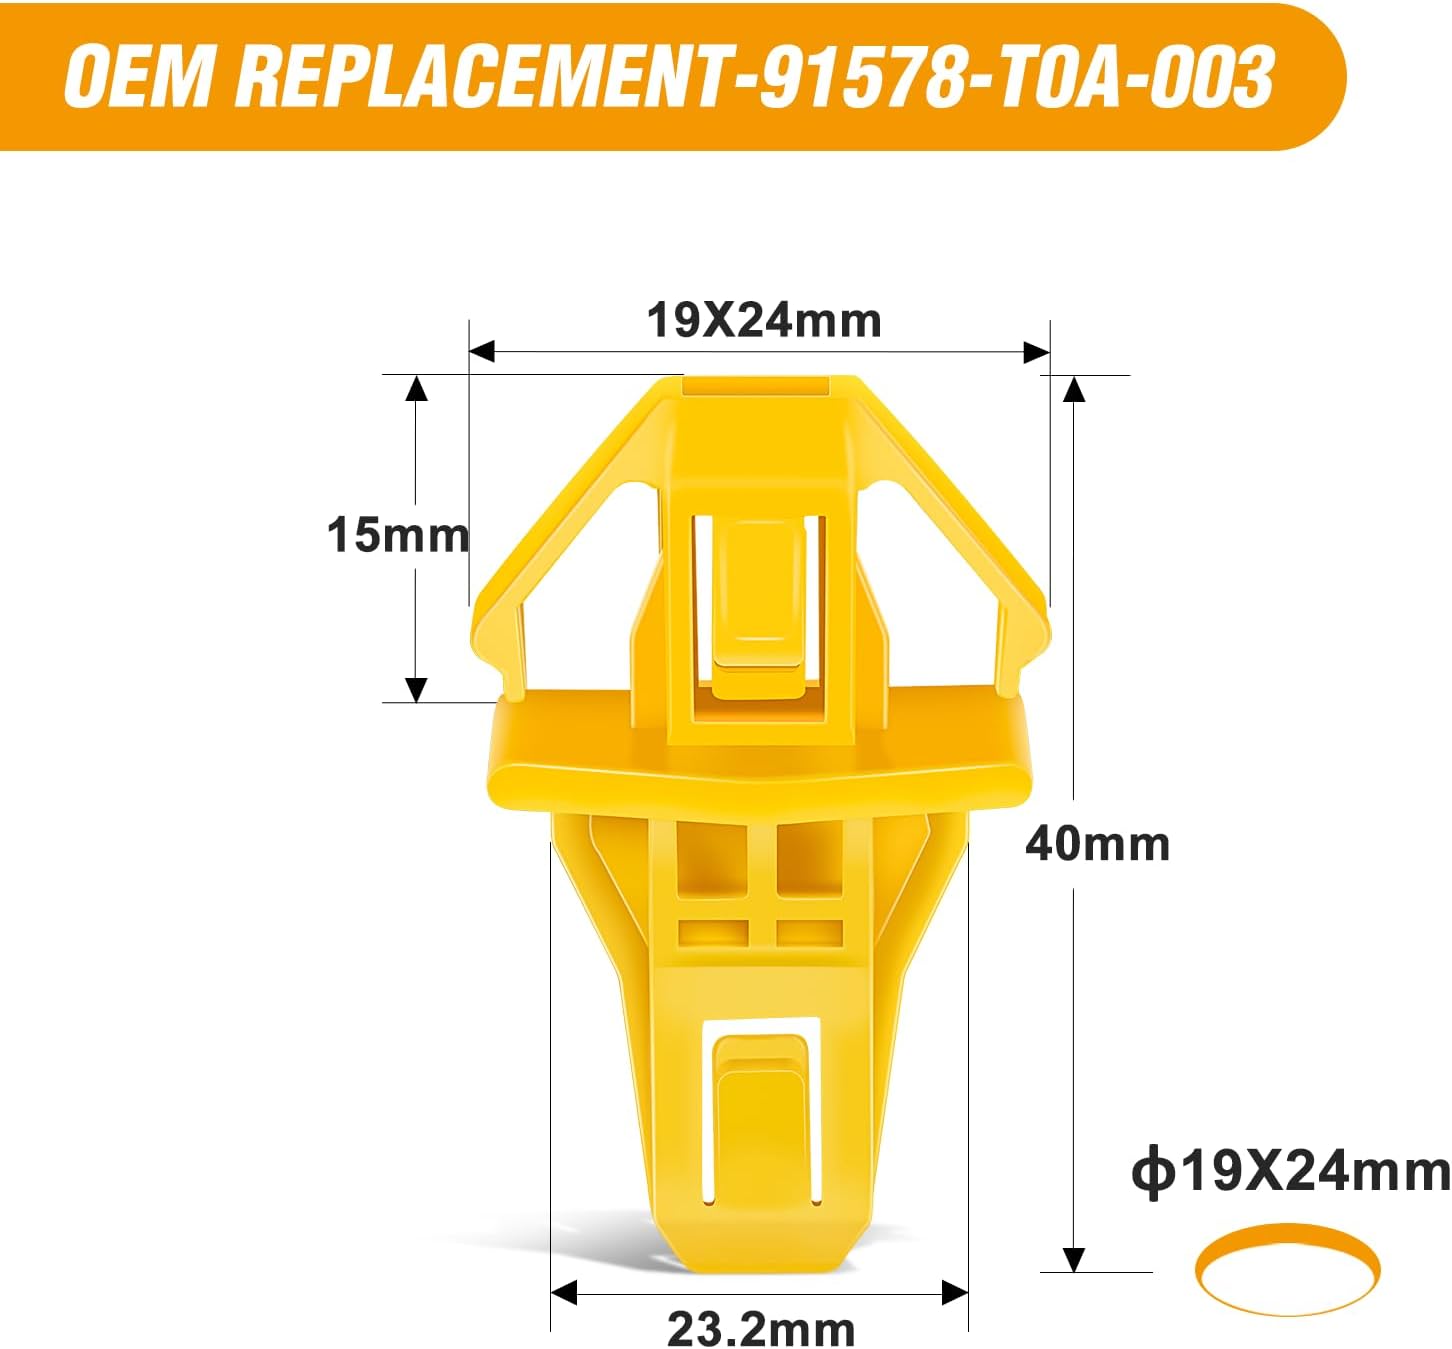 50 Pcs Bumper Moulding Fastener Rivet For Honda AcuraOEM Replacement 91578-T0A-003 Radiator Grille Honda CR-V 2012-2014 Acura RLX 2018-2020